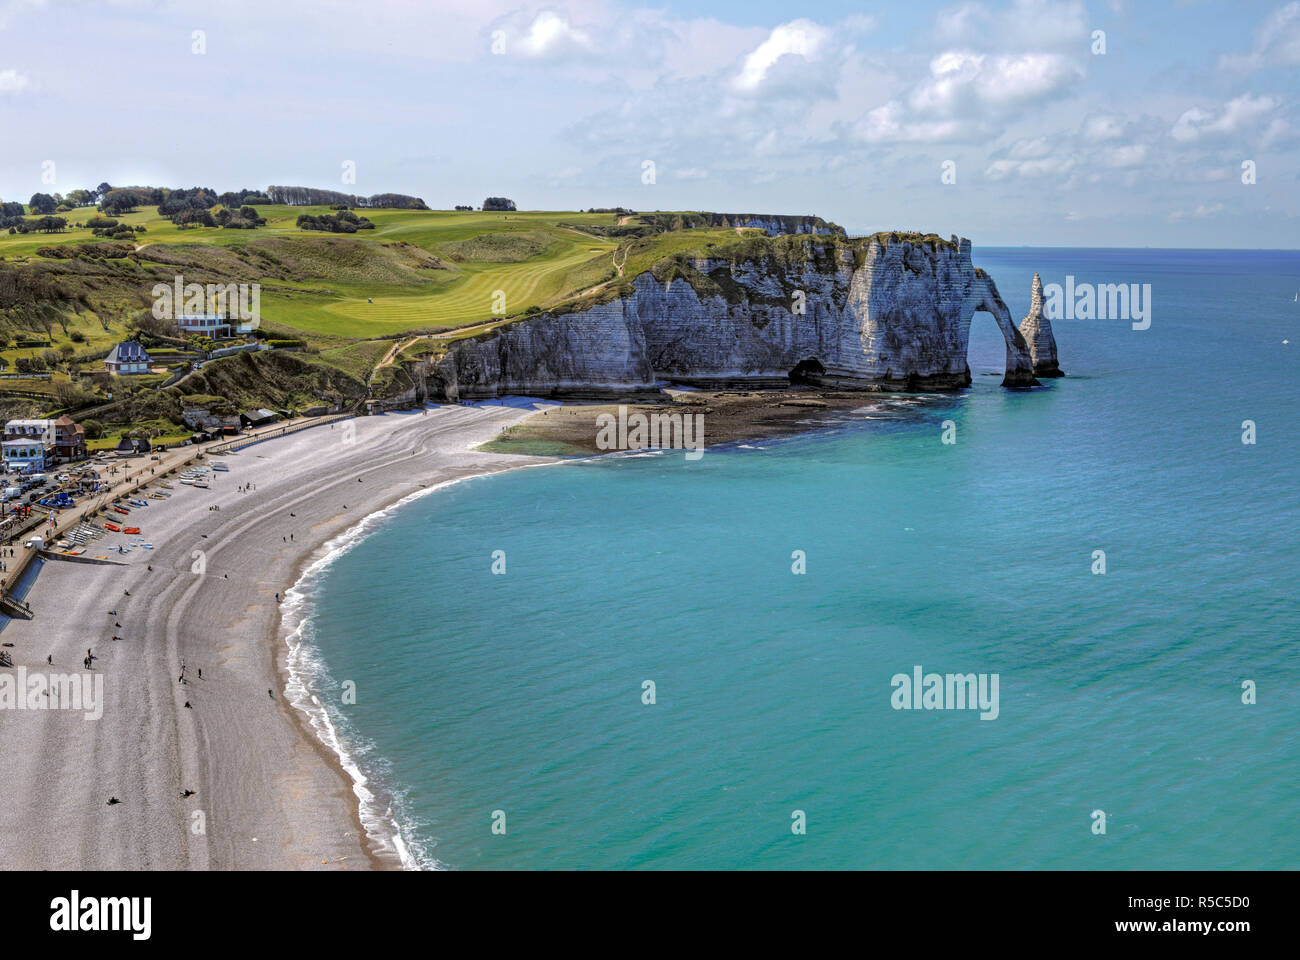 Cliffs on the sea beach, Etretat, Seine-Maritime department, Upper Normandy, France Stock Photo